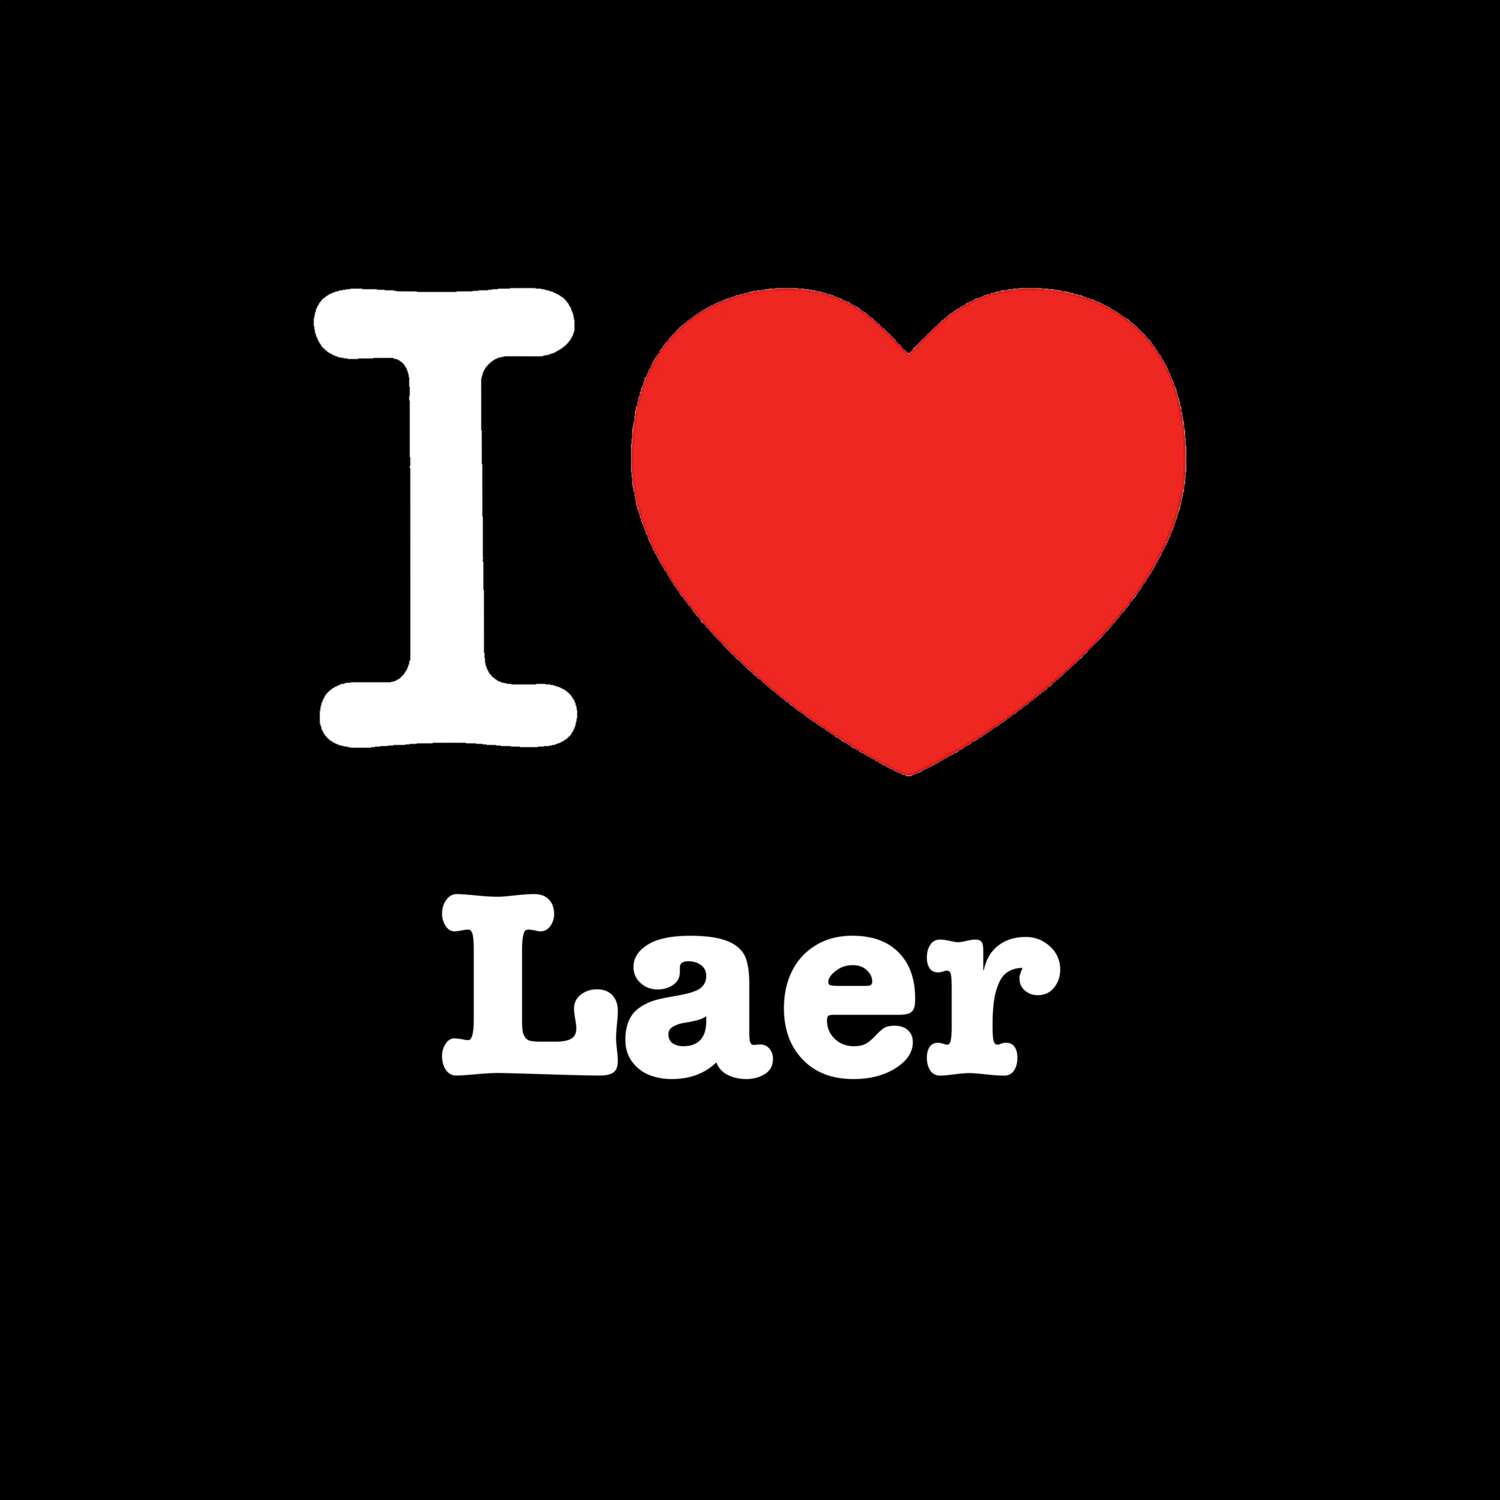 Laer T-Shirt »I love«